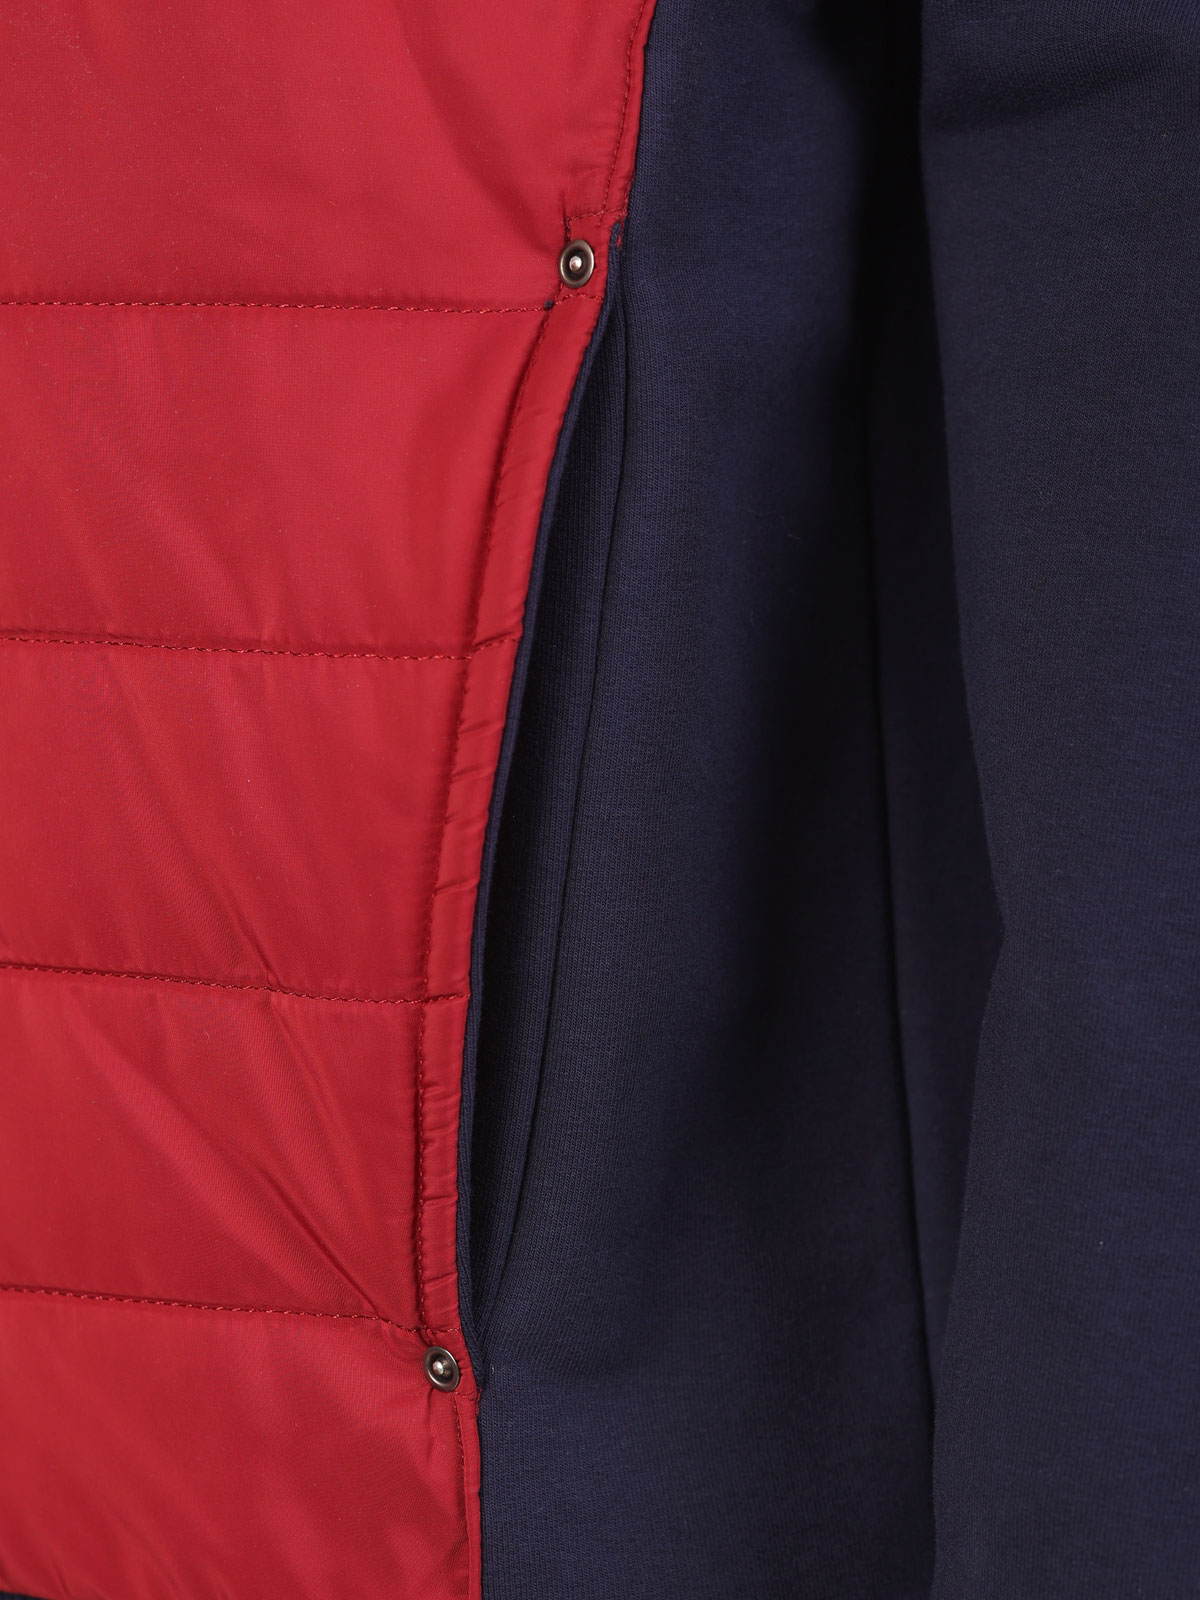 Sweatshirt in dark blue and red - 28103 € 66.37 img2